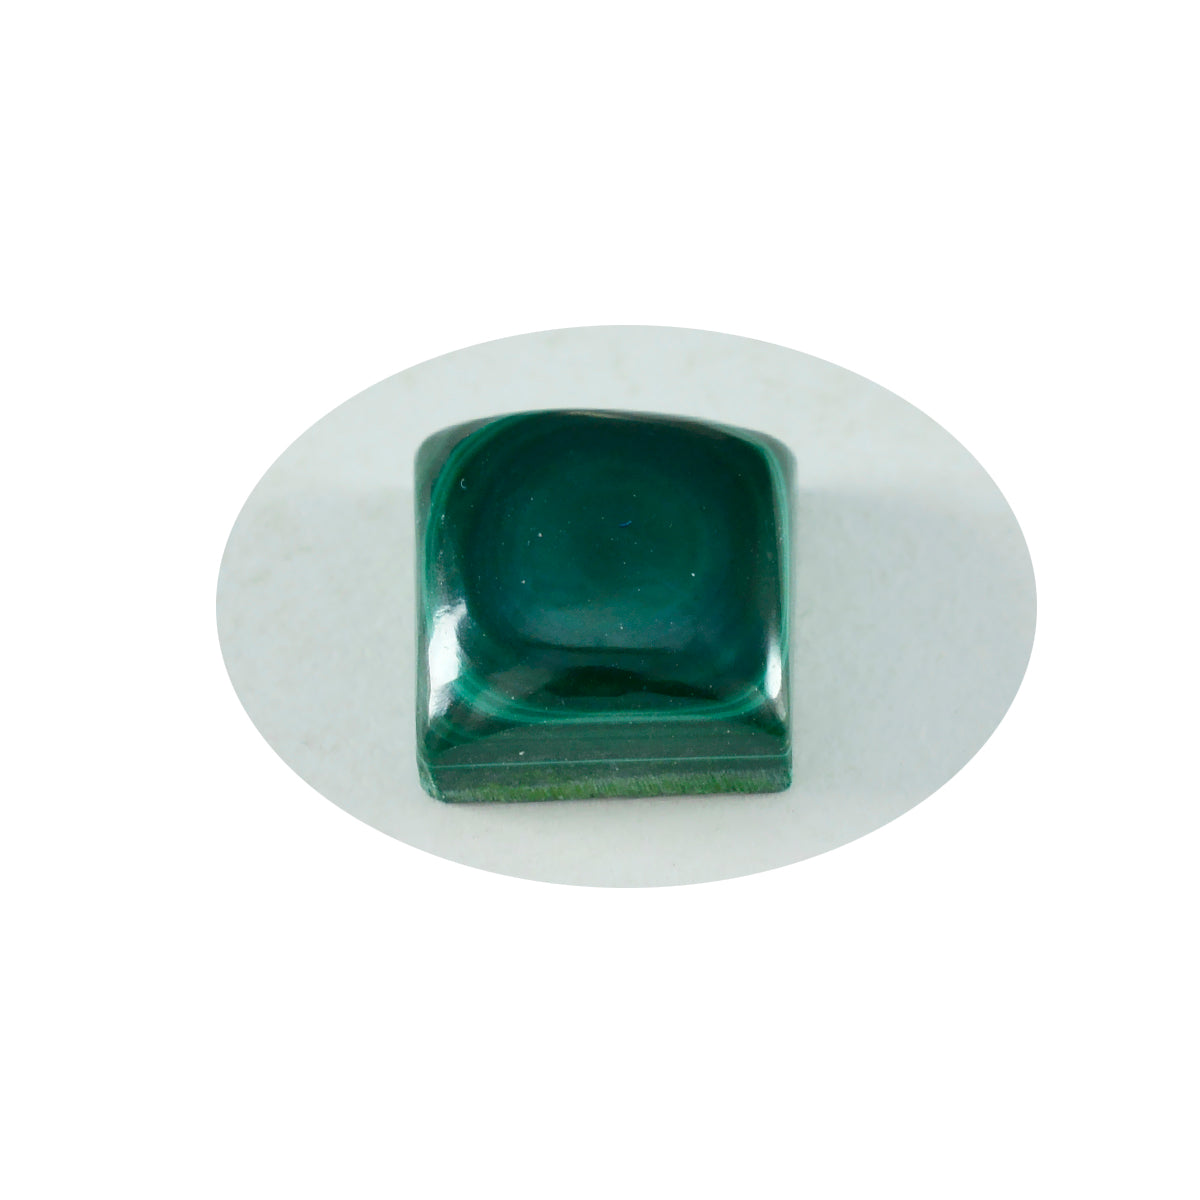 Riyogems 1PC Green Malachite Cabochon 13x13 mm Square Shape A+1 Quality Loose Gemstone